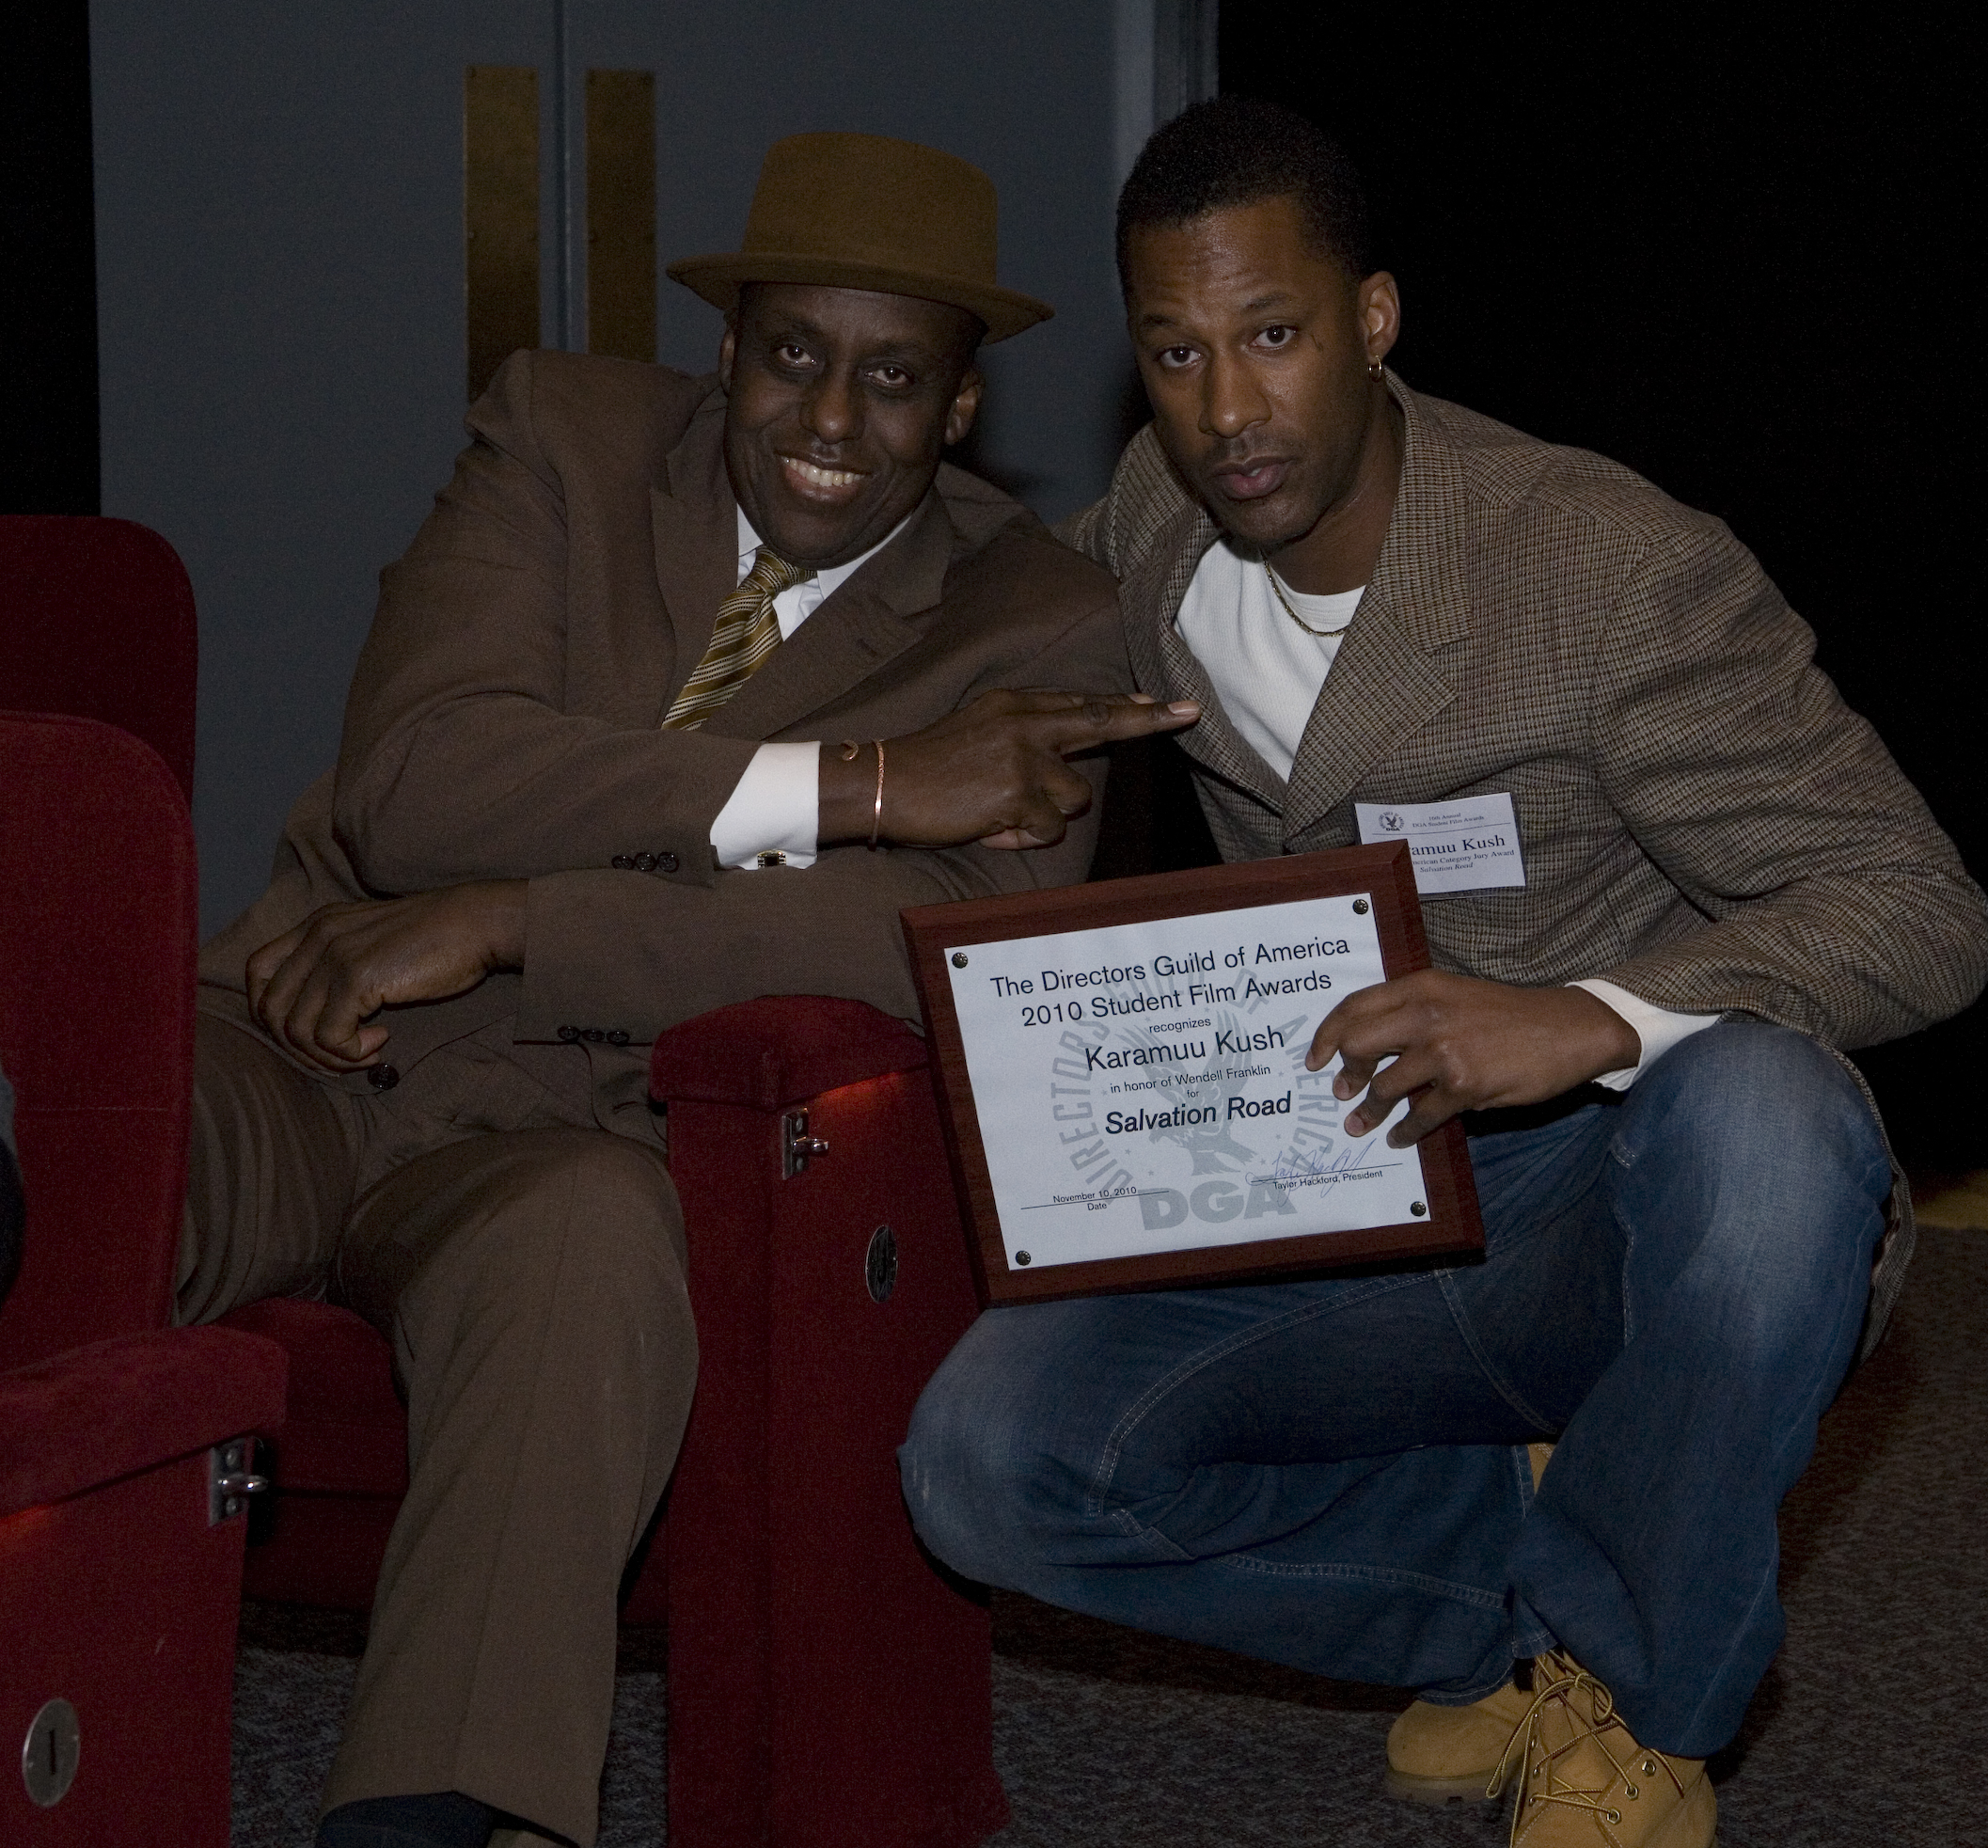 Bill Duke and Ka'ramuu Kush at DGA Student Film Awards, 2010